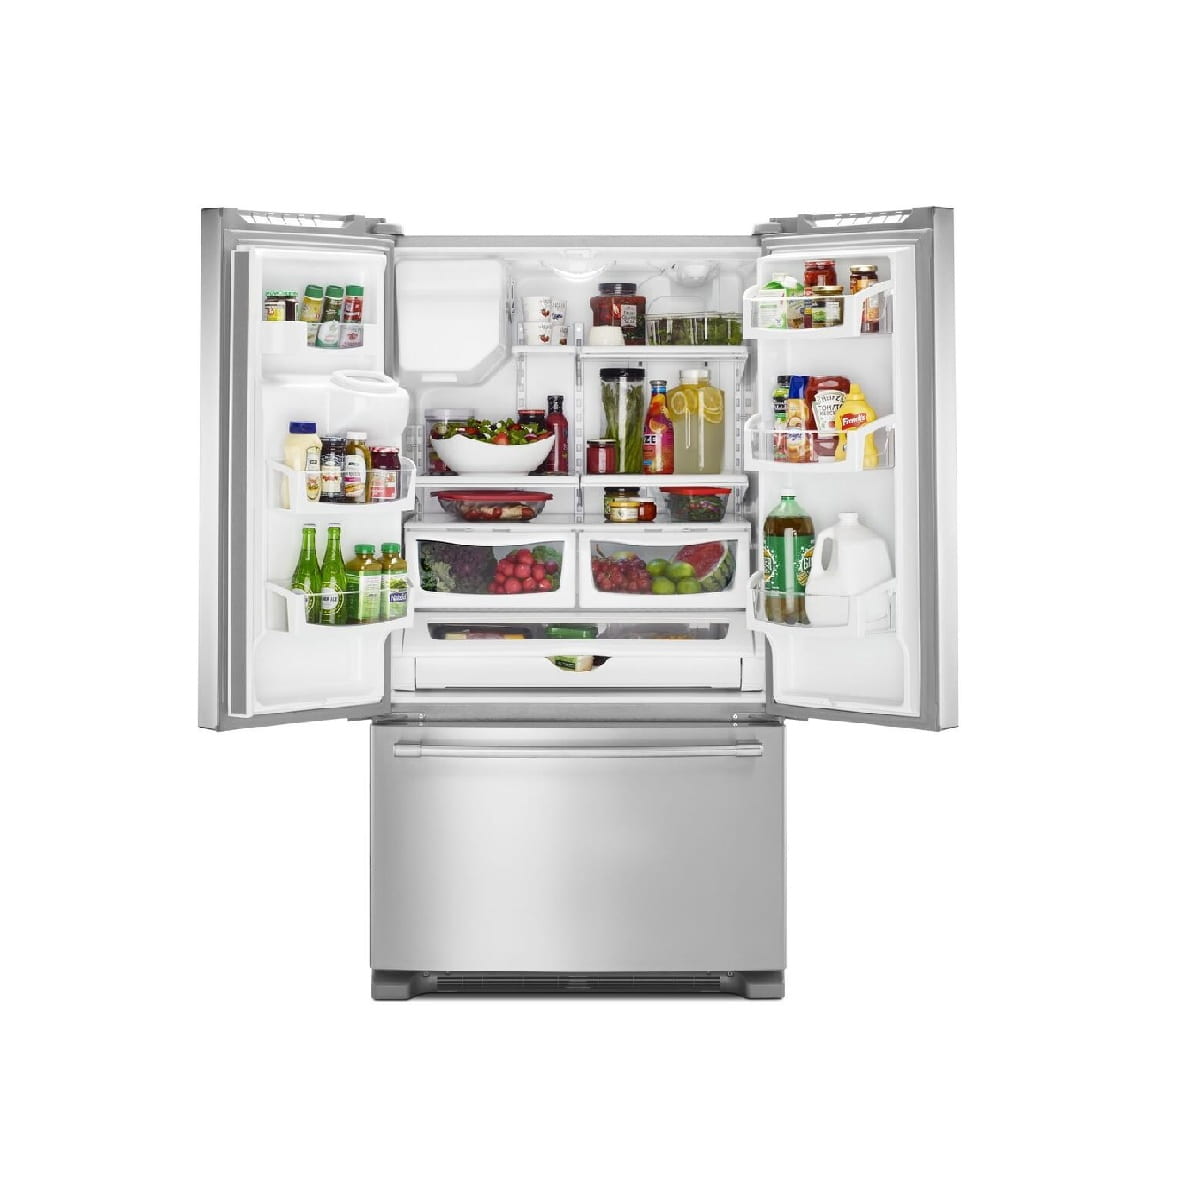 Maytag refrigerator reset button